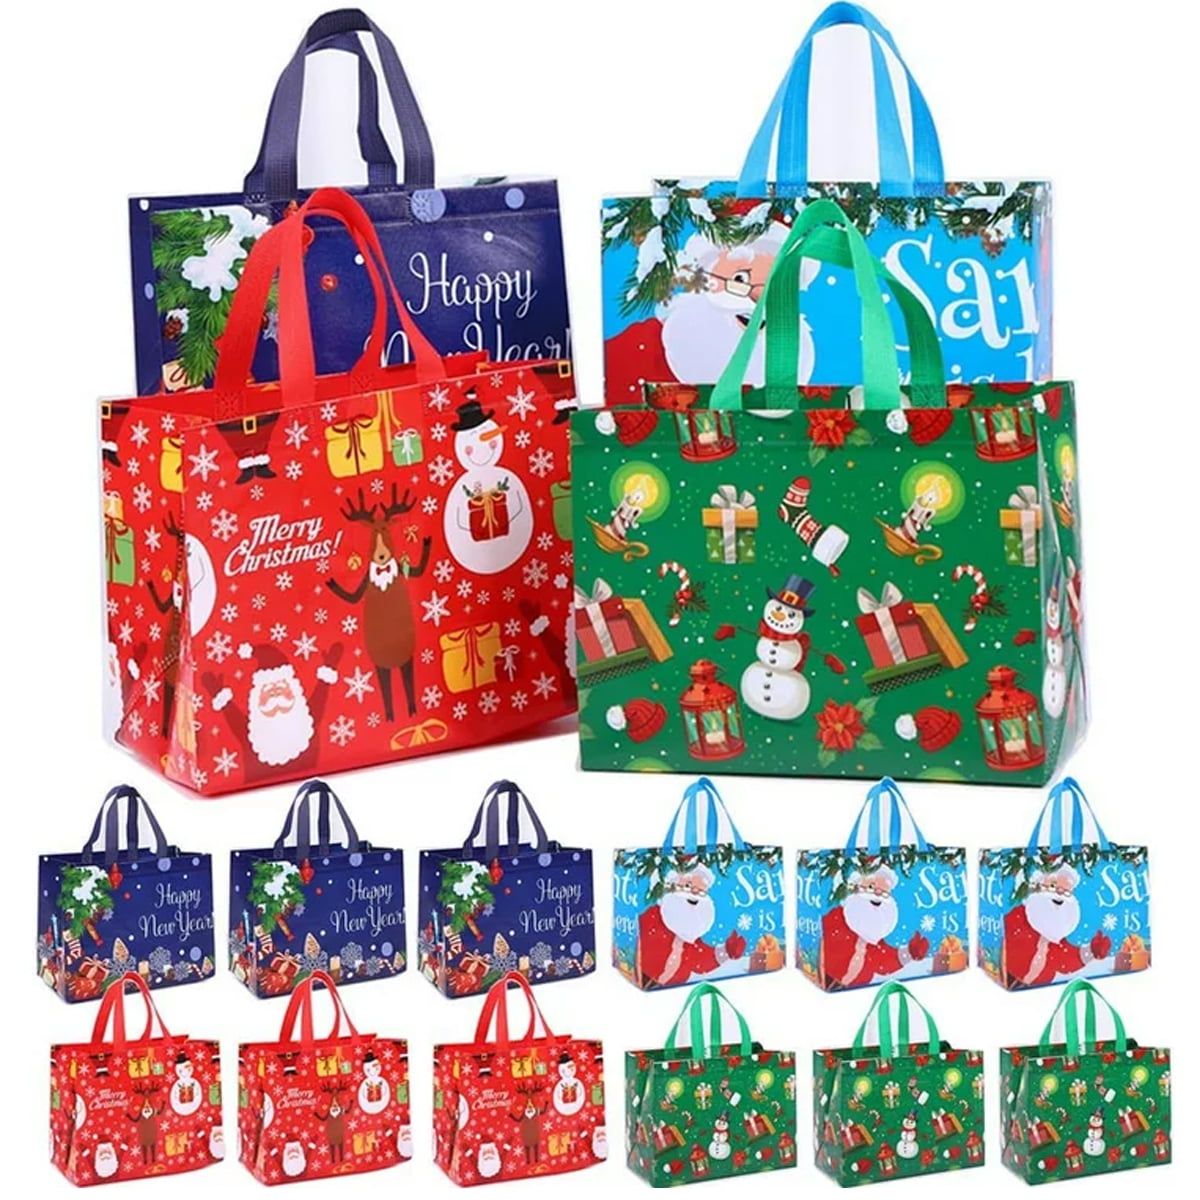 Husfou 12 Pack Christmas Gift Bags Large Christmas Tote Bags with ...